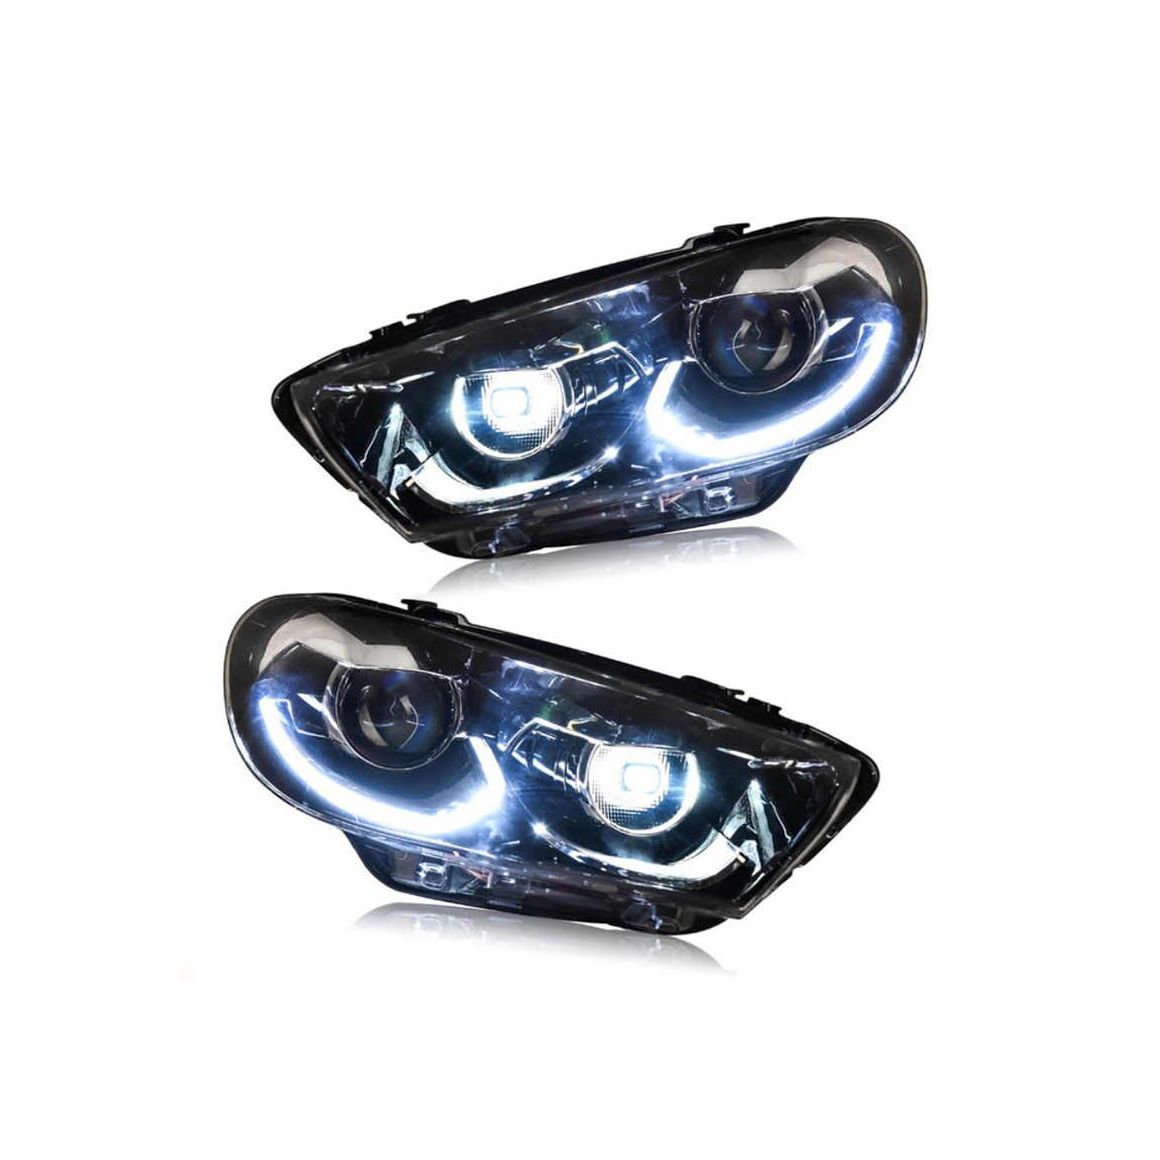 VW Scirocco Miroir Flaque DEL courtoisie Lumière Xénon Ampoules Upgrade s/n s'adapte